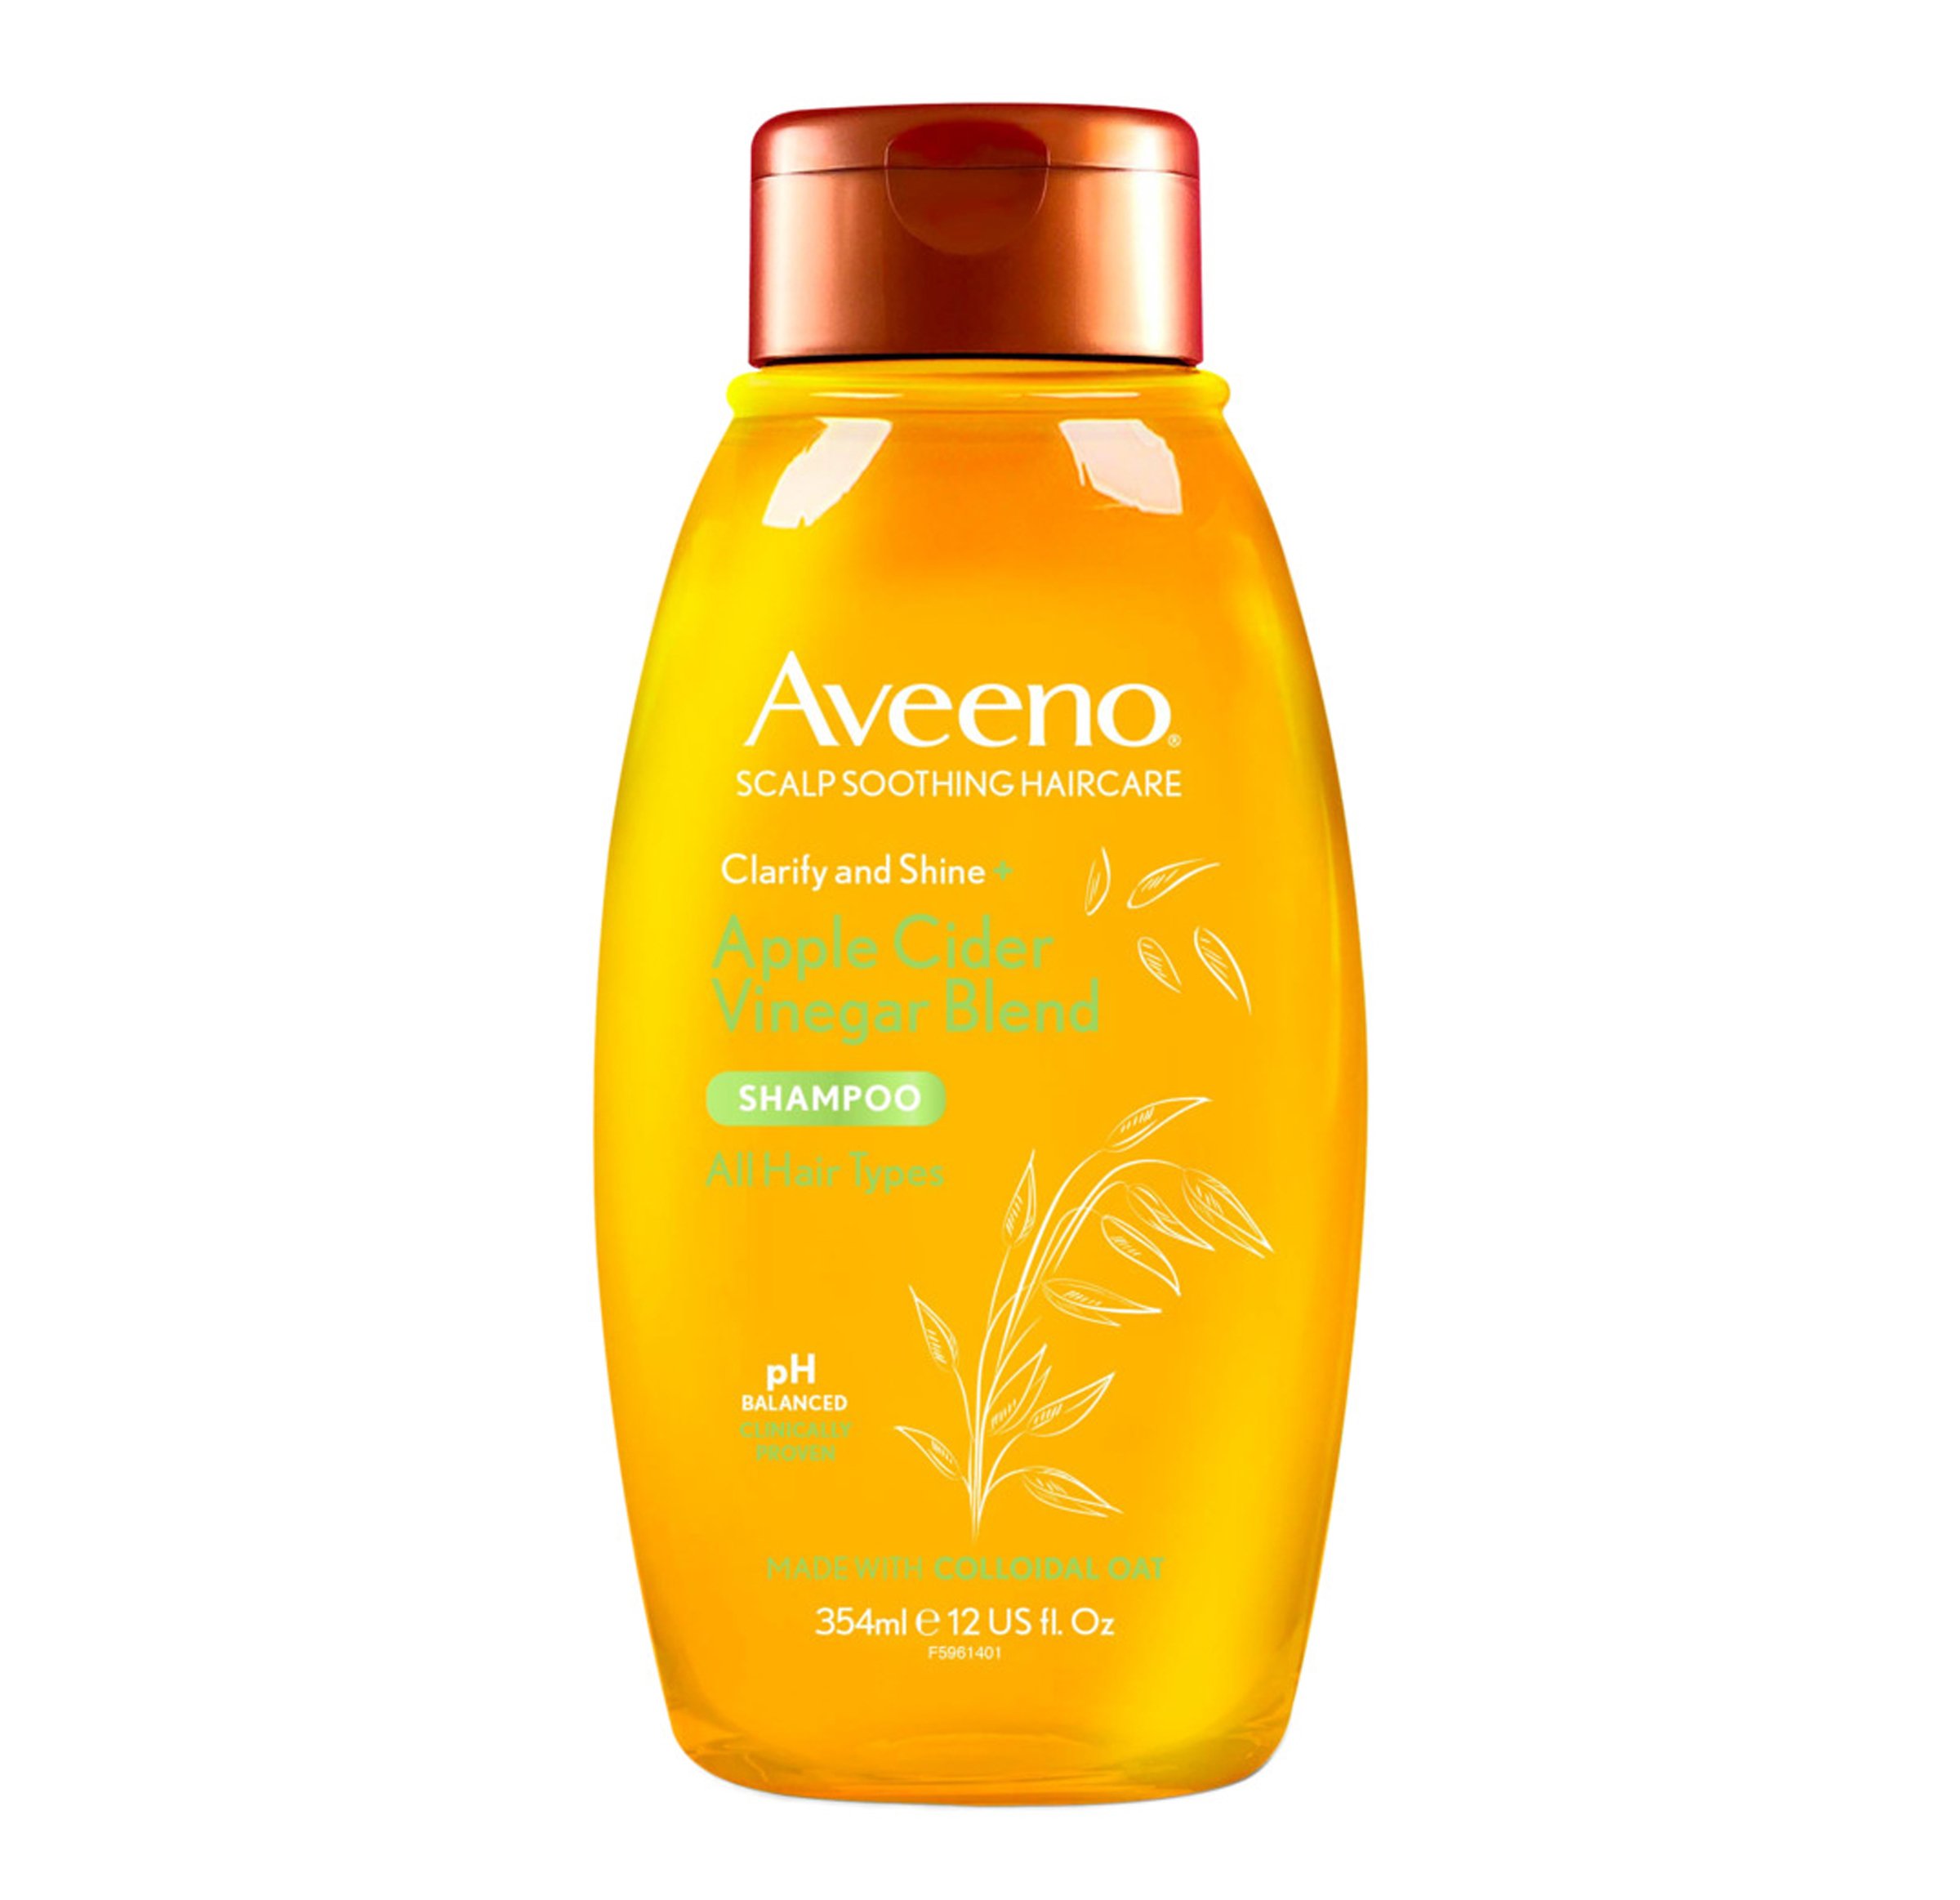 Aveeno Clarify and Shine+ Apple Cider Vinegar Shampoo €9.99